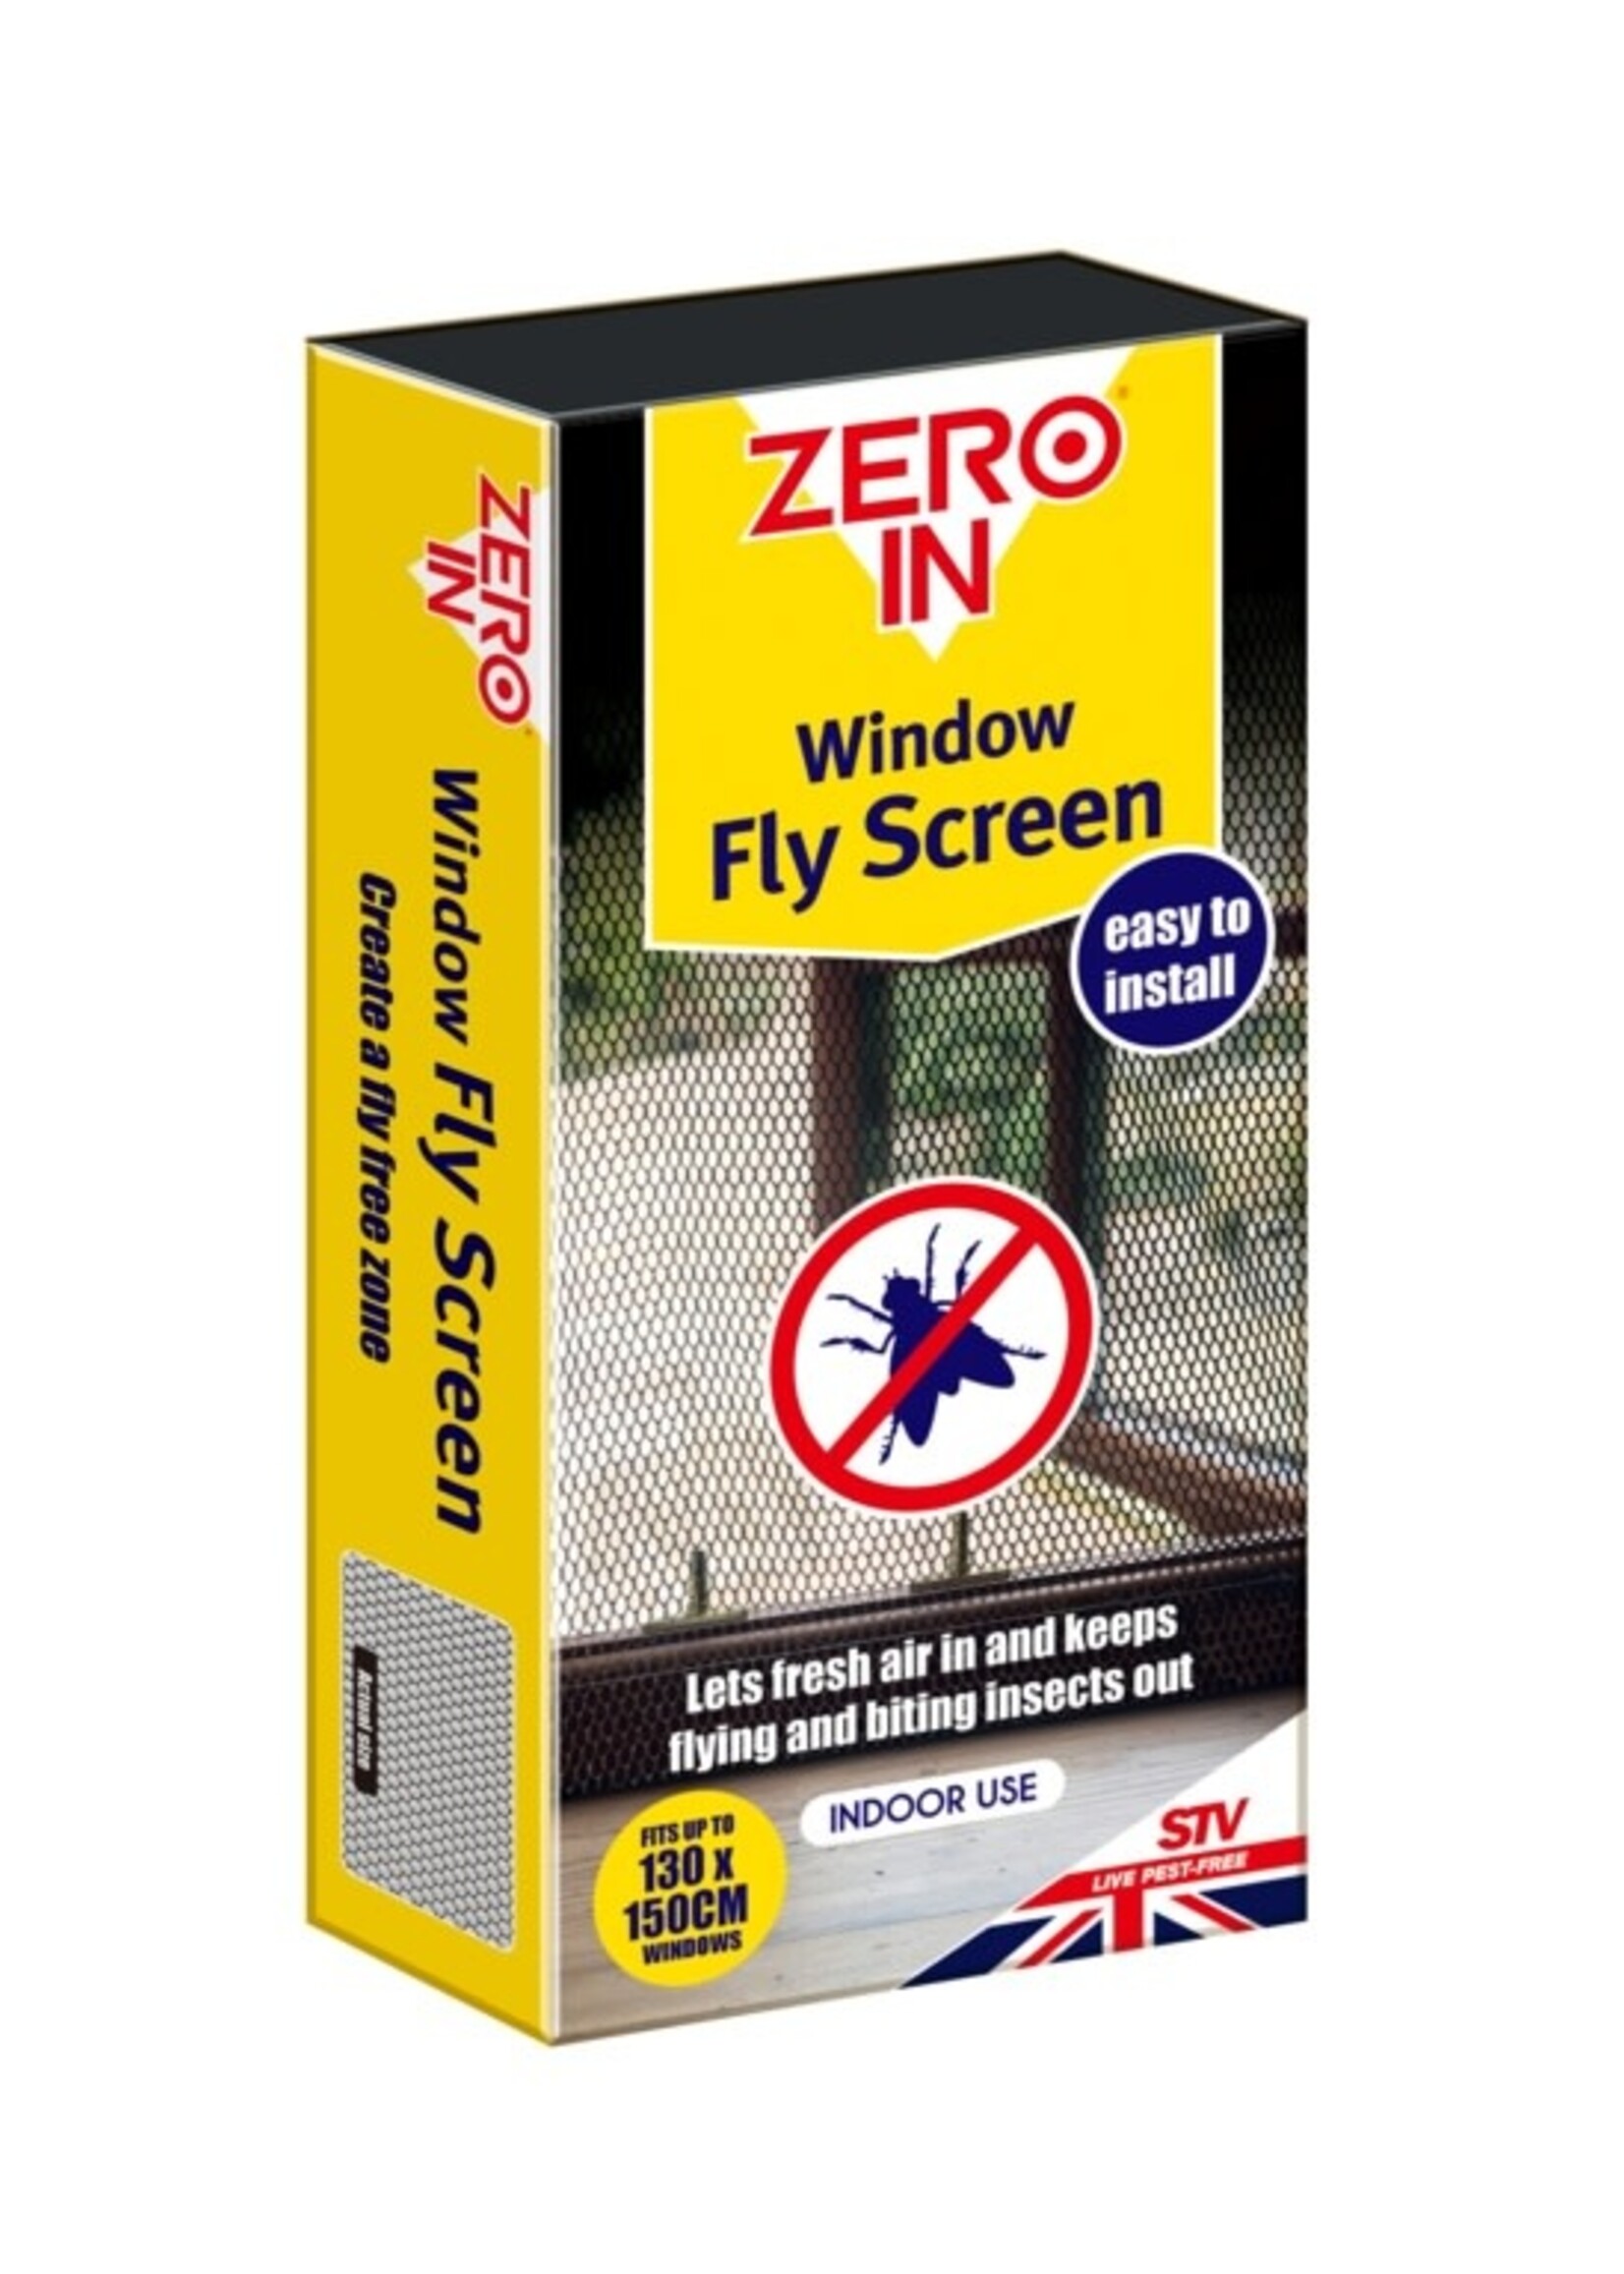 The Buzz (STV) Window Fly Screen